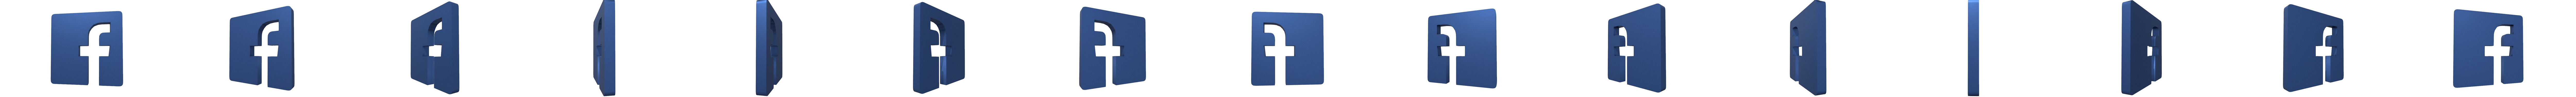 Facebook Logo Download Free 3d Model By Anthony Yanez Paulyanez fe